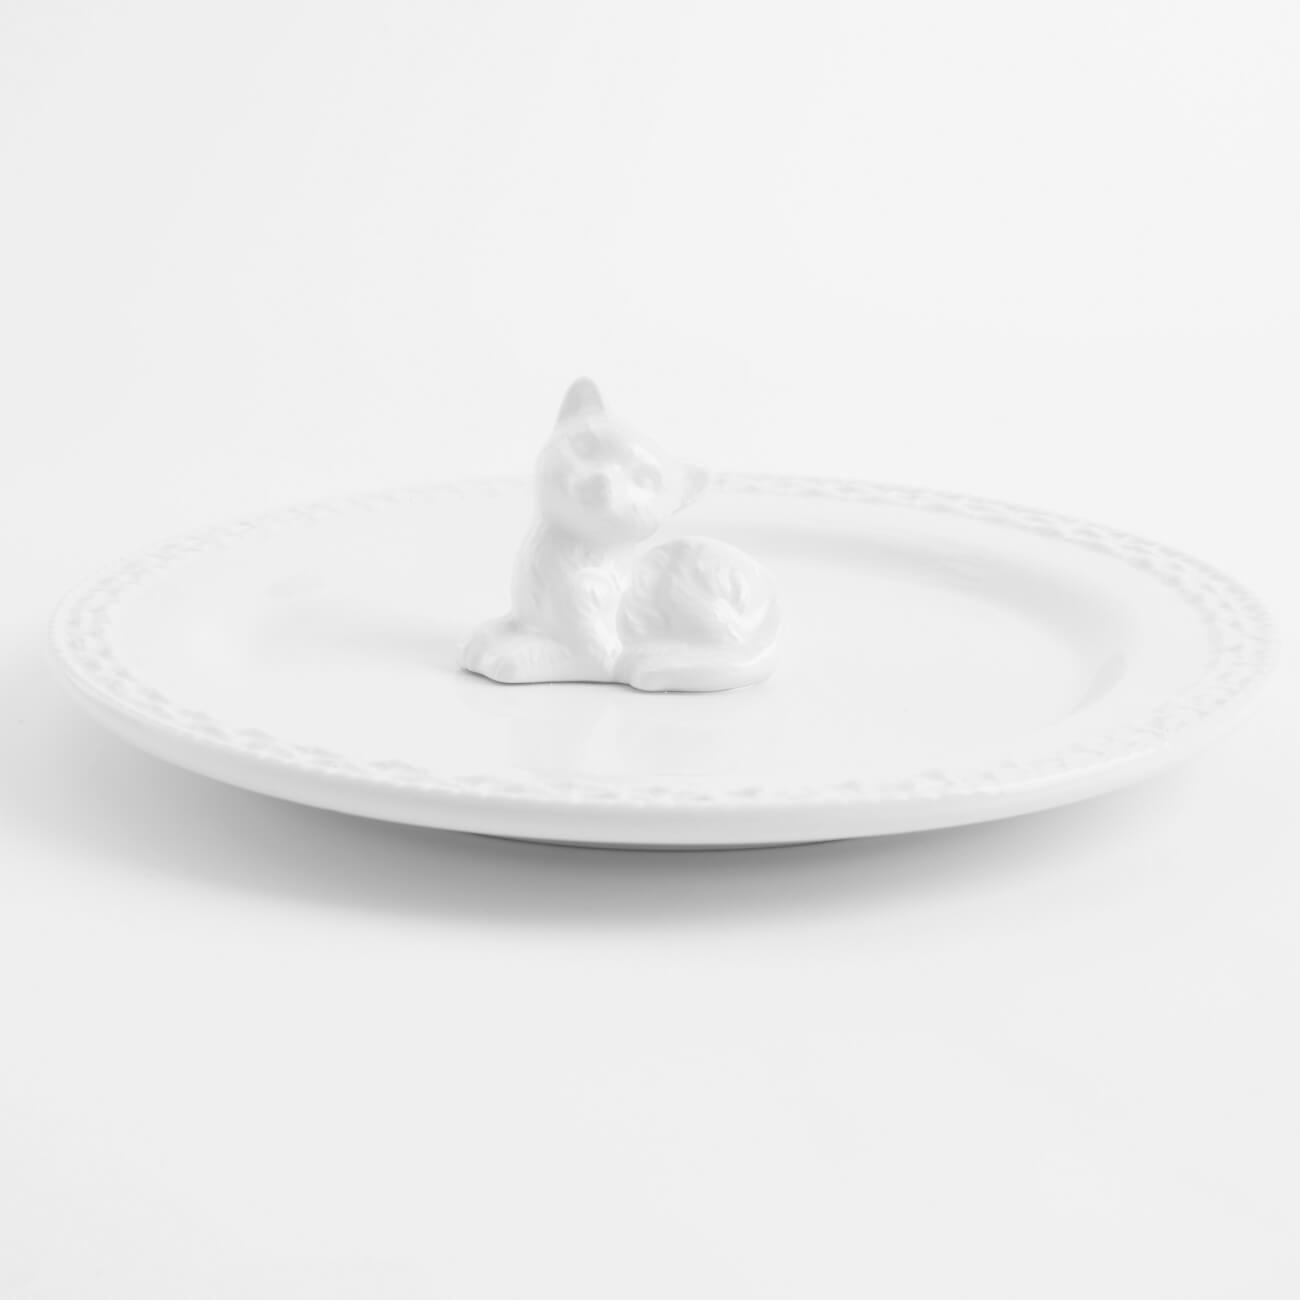 Блюдо, 20 см, керамика, белое, Кот, Kitten блюдо 26 см керамика круглое зеленое шишки на листе fir cone